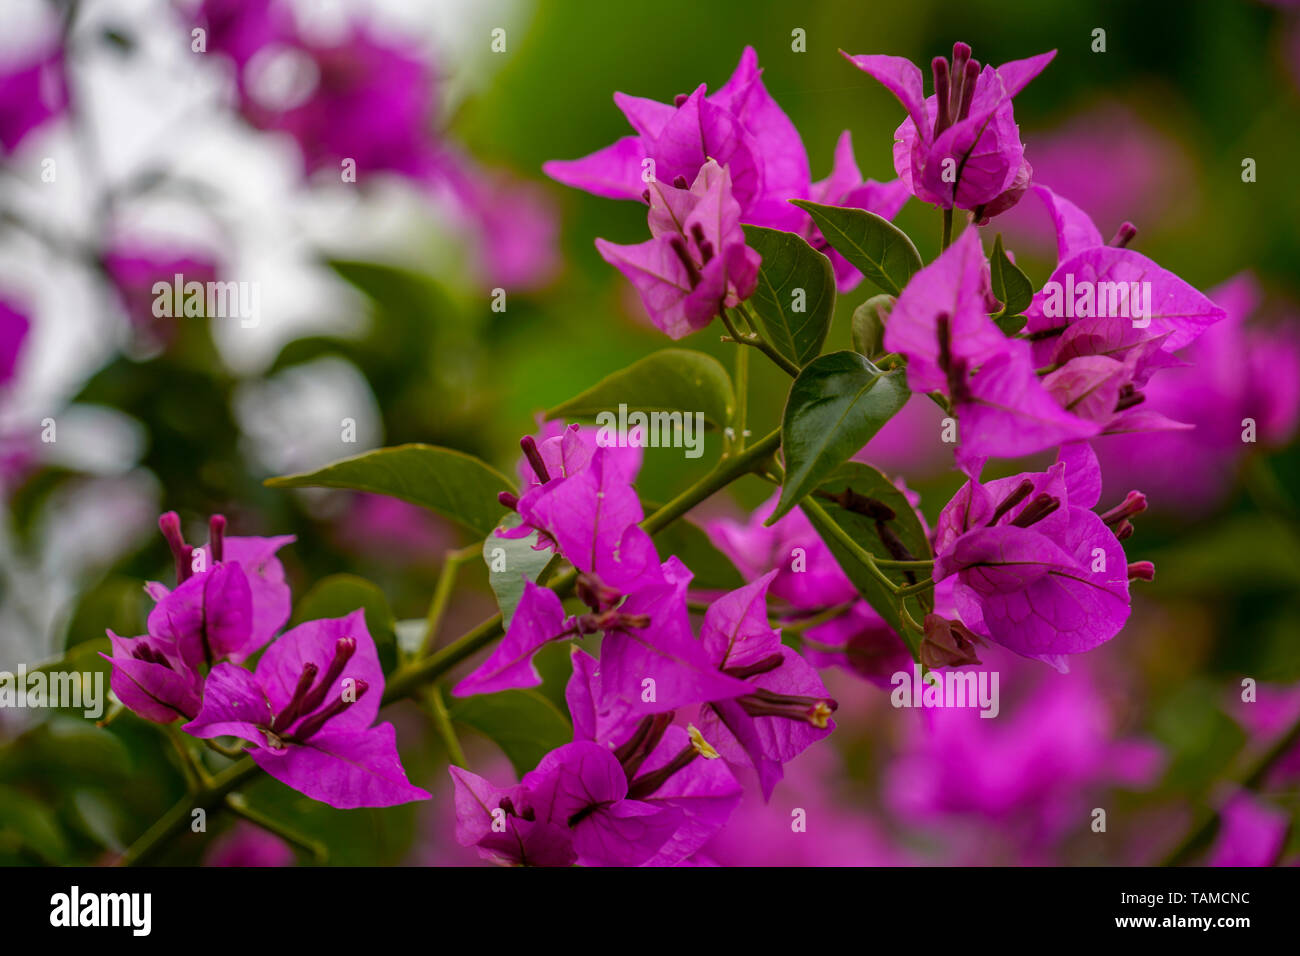 Purple flowers of a Bougainvillea bush close up Stock Photo